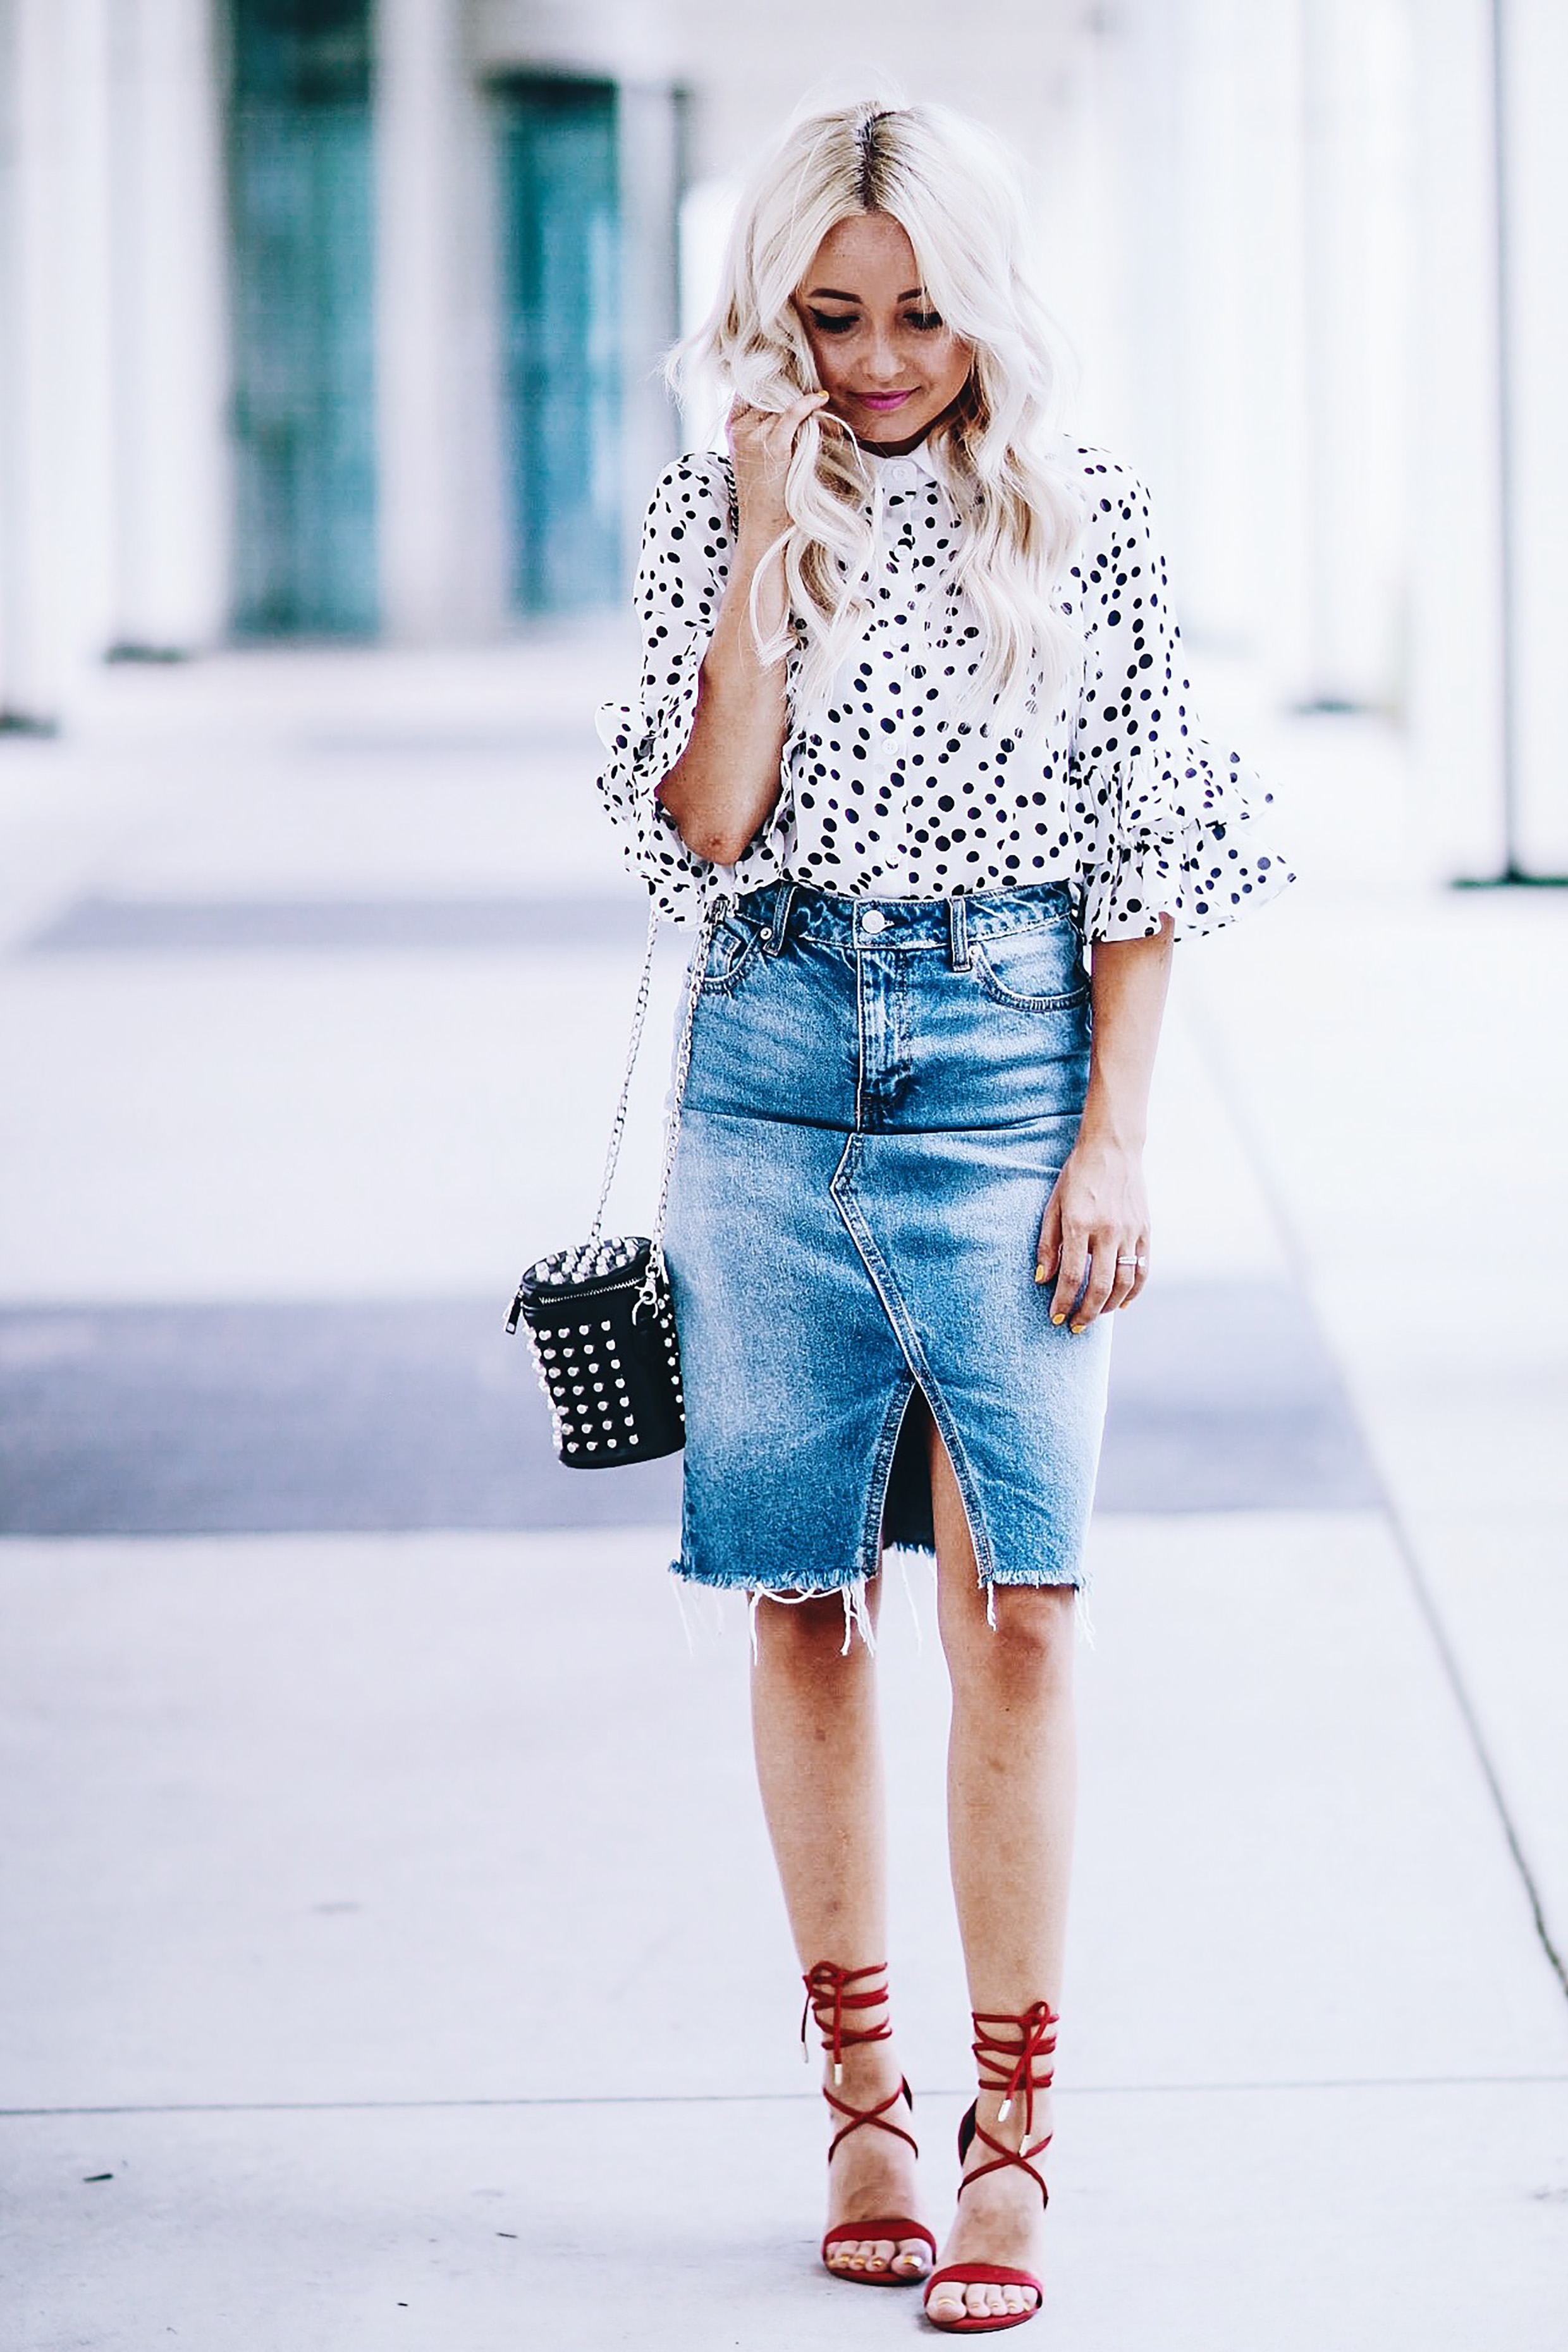 Alena Gidenko of modaprints.com styles a denim pencil skirt with a polka dot blouse